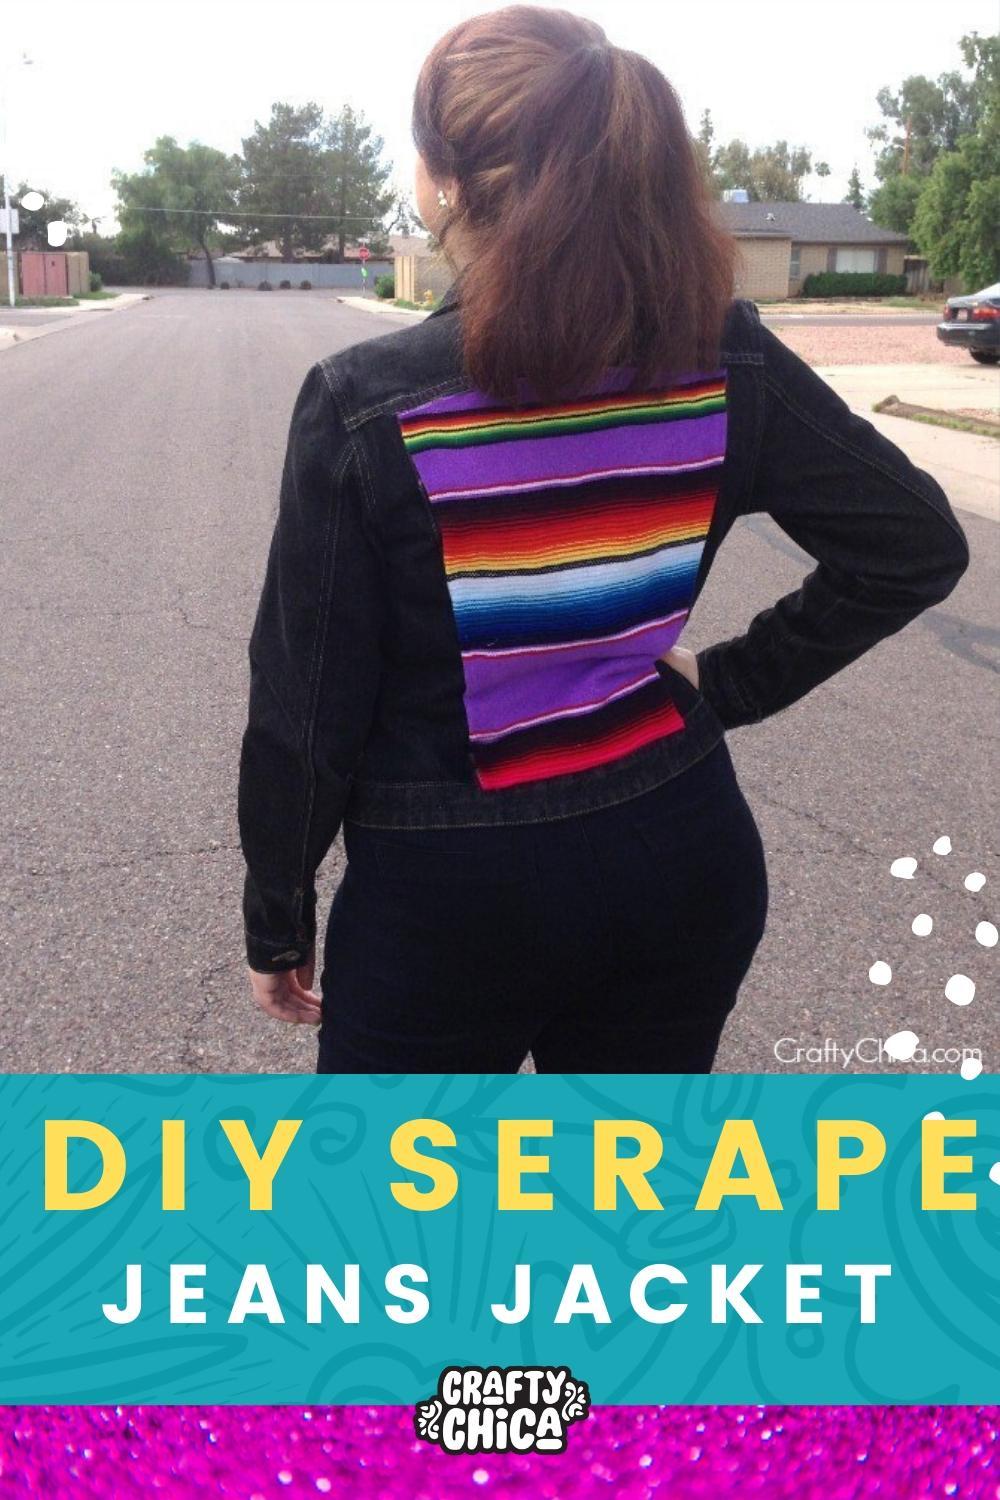 DIY Serape Jeans Jacket #craftychica